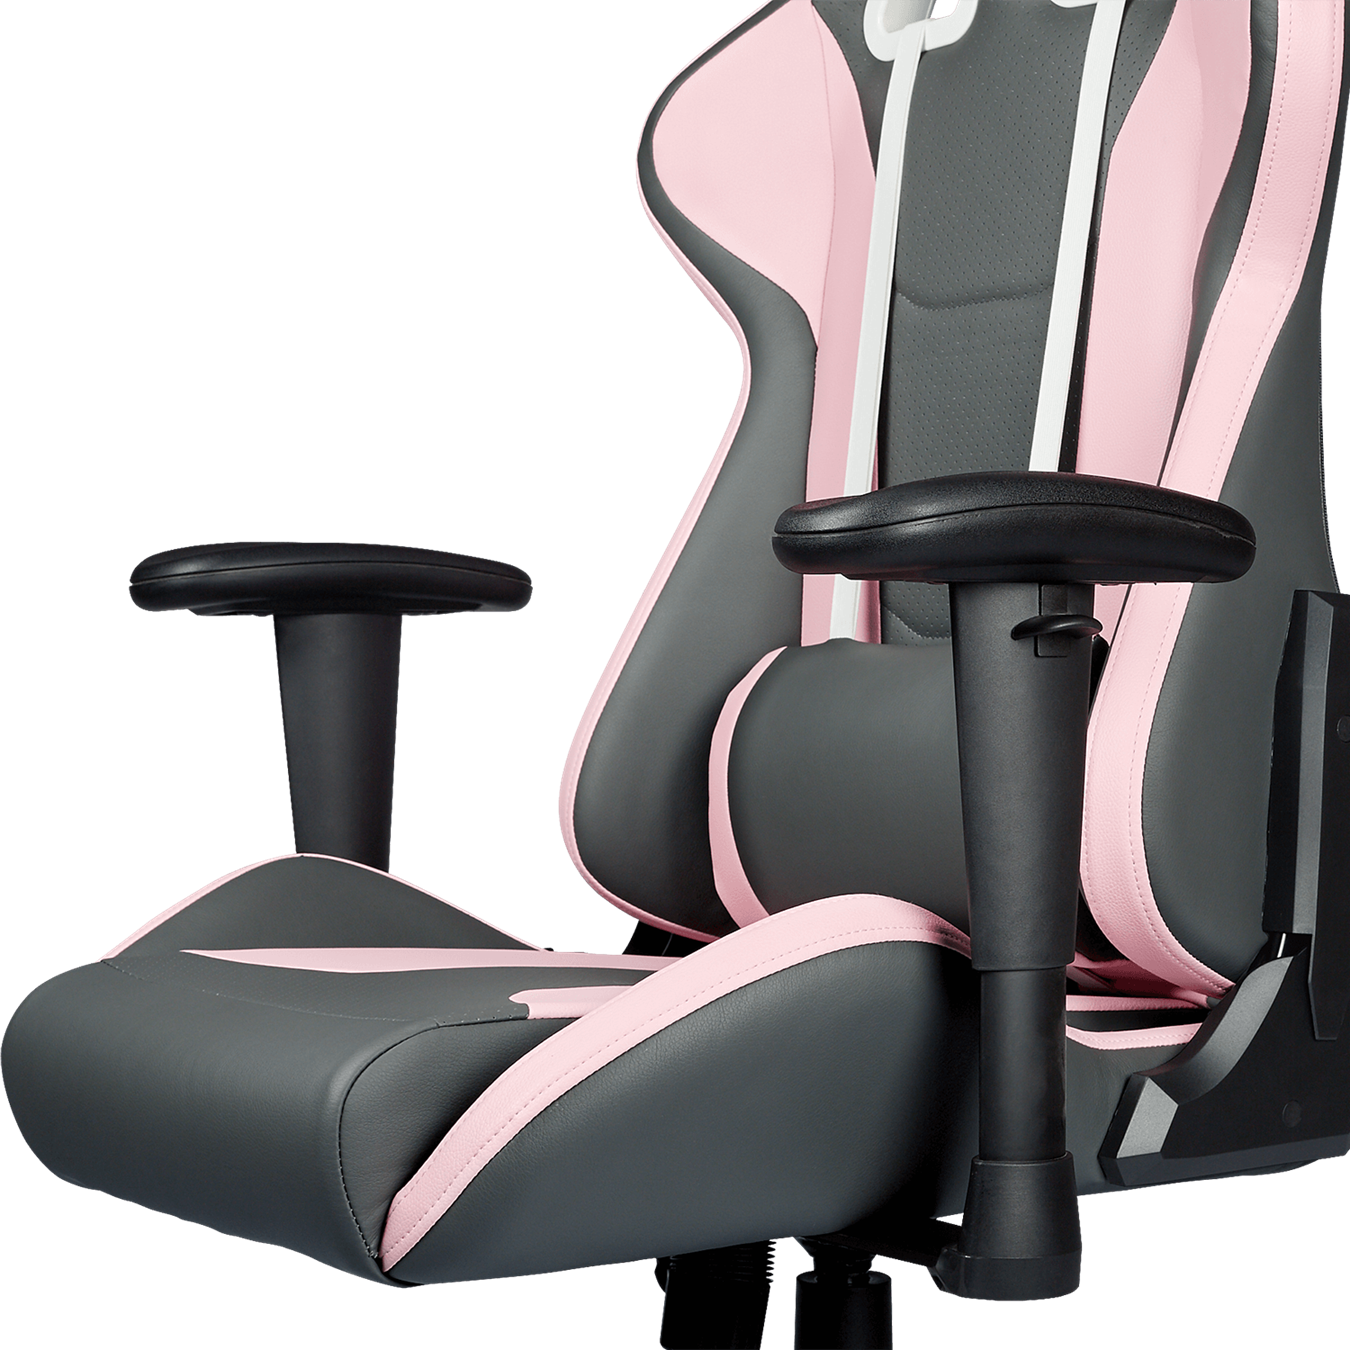 Caliber R1S Rose Gaming Chair - Rose White & Rose Gray